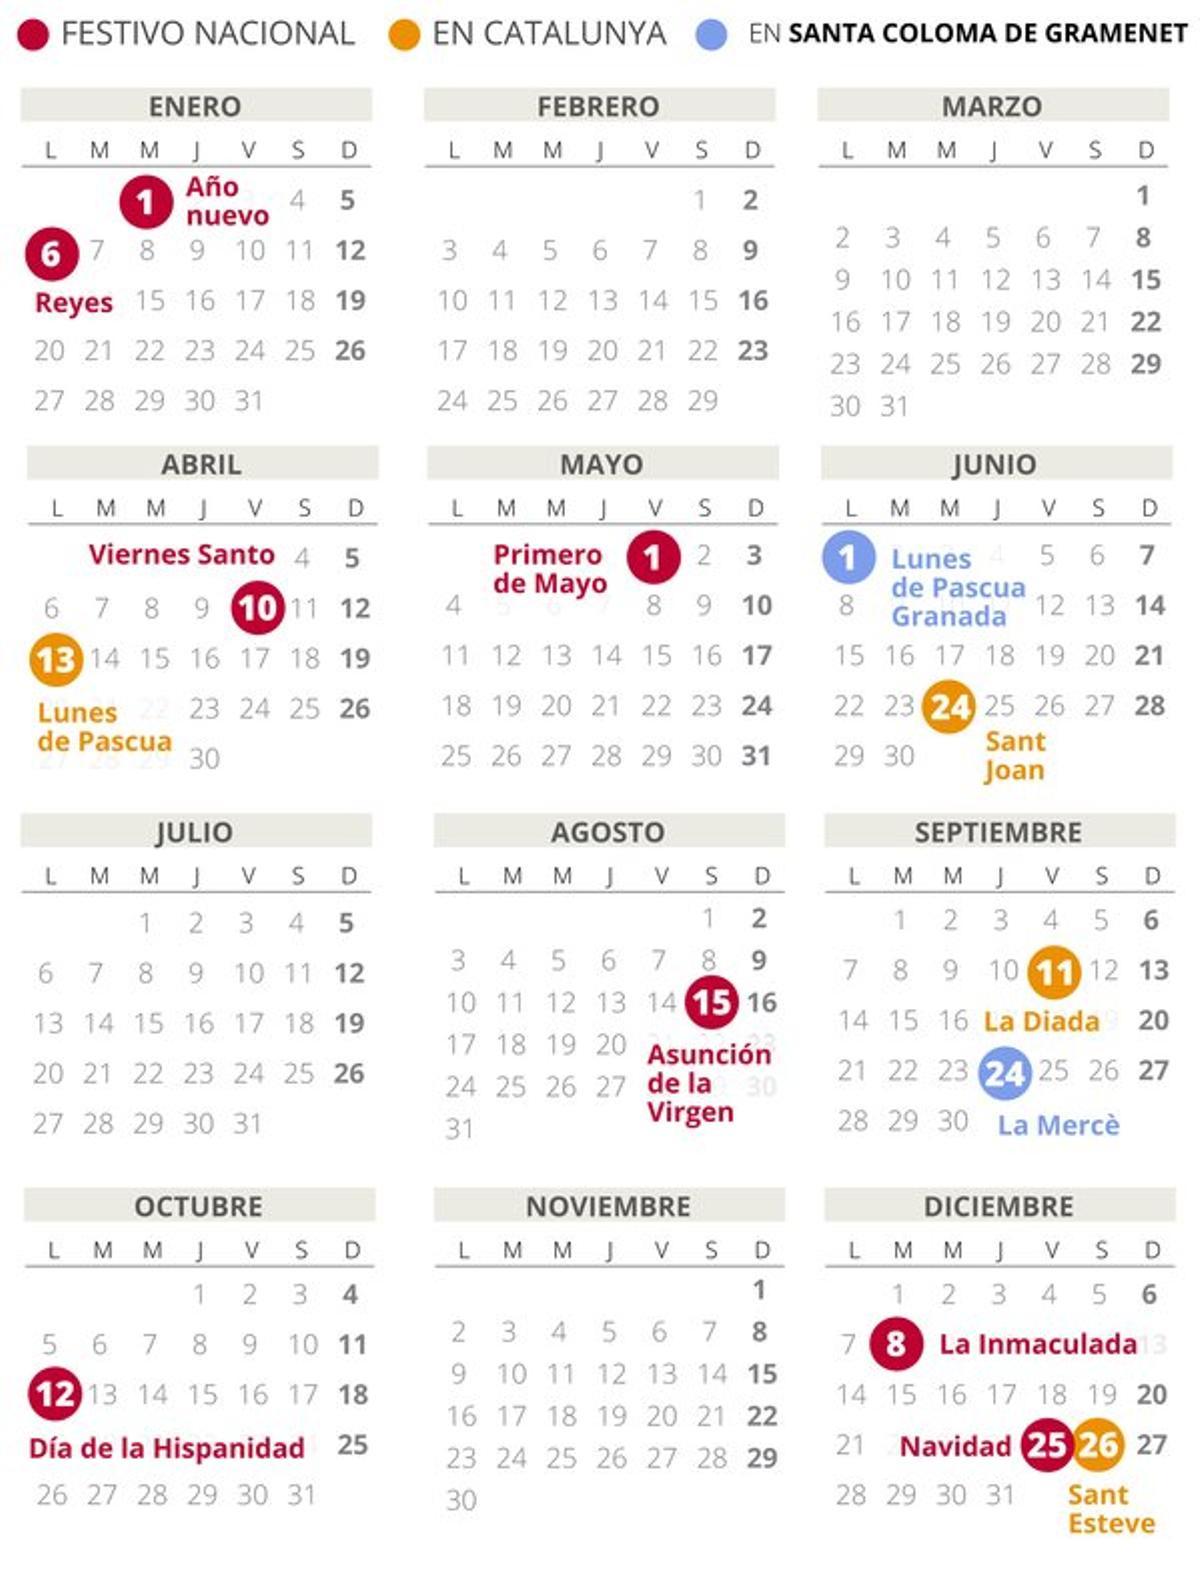 Calendario laboral de Santa Coloma de Gramenet del 2020.